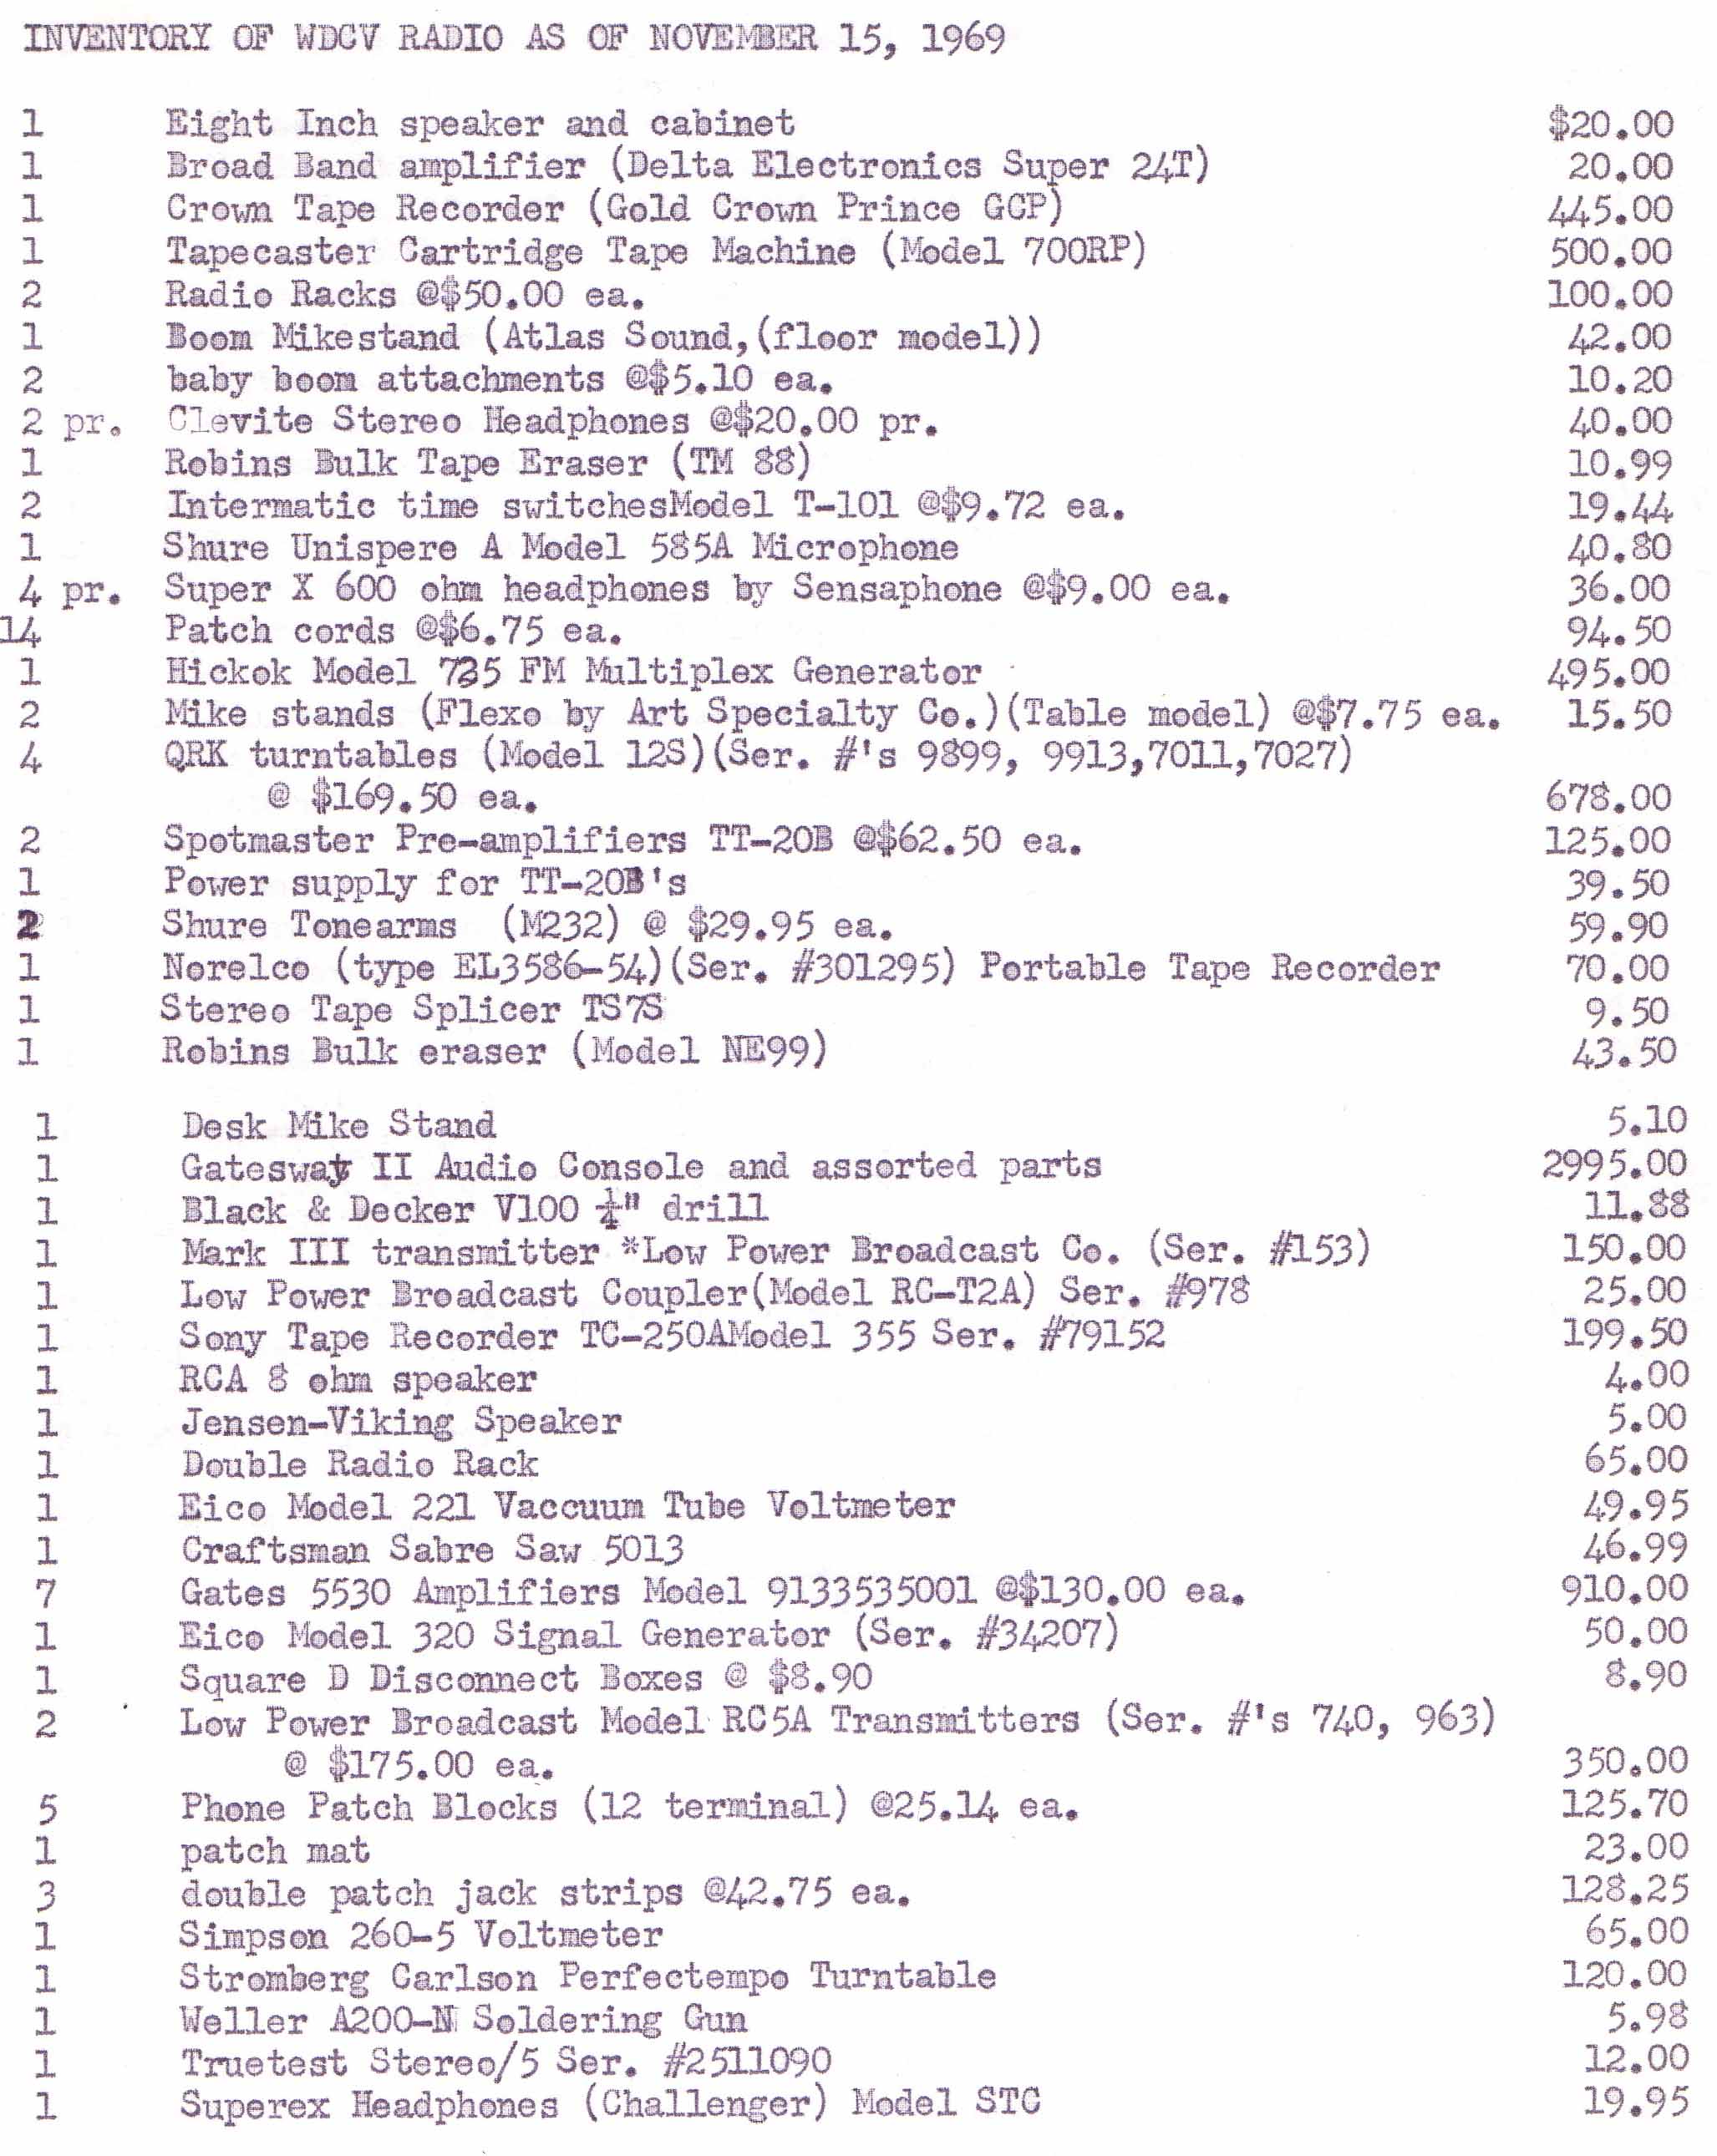 inventory-nov-15-1969-part-1